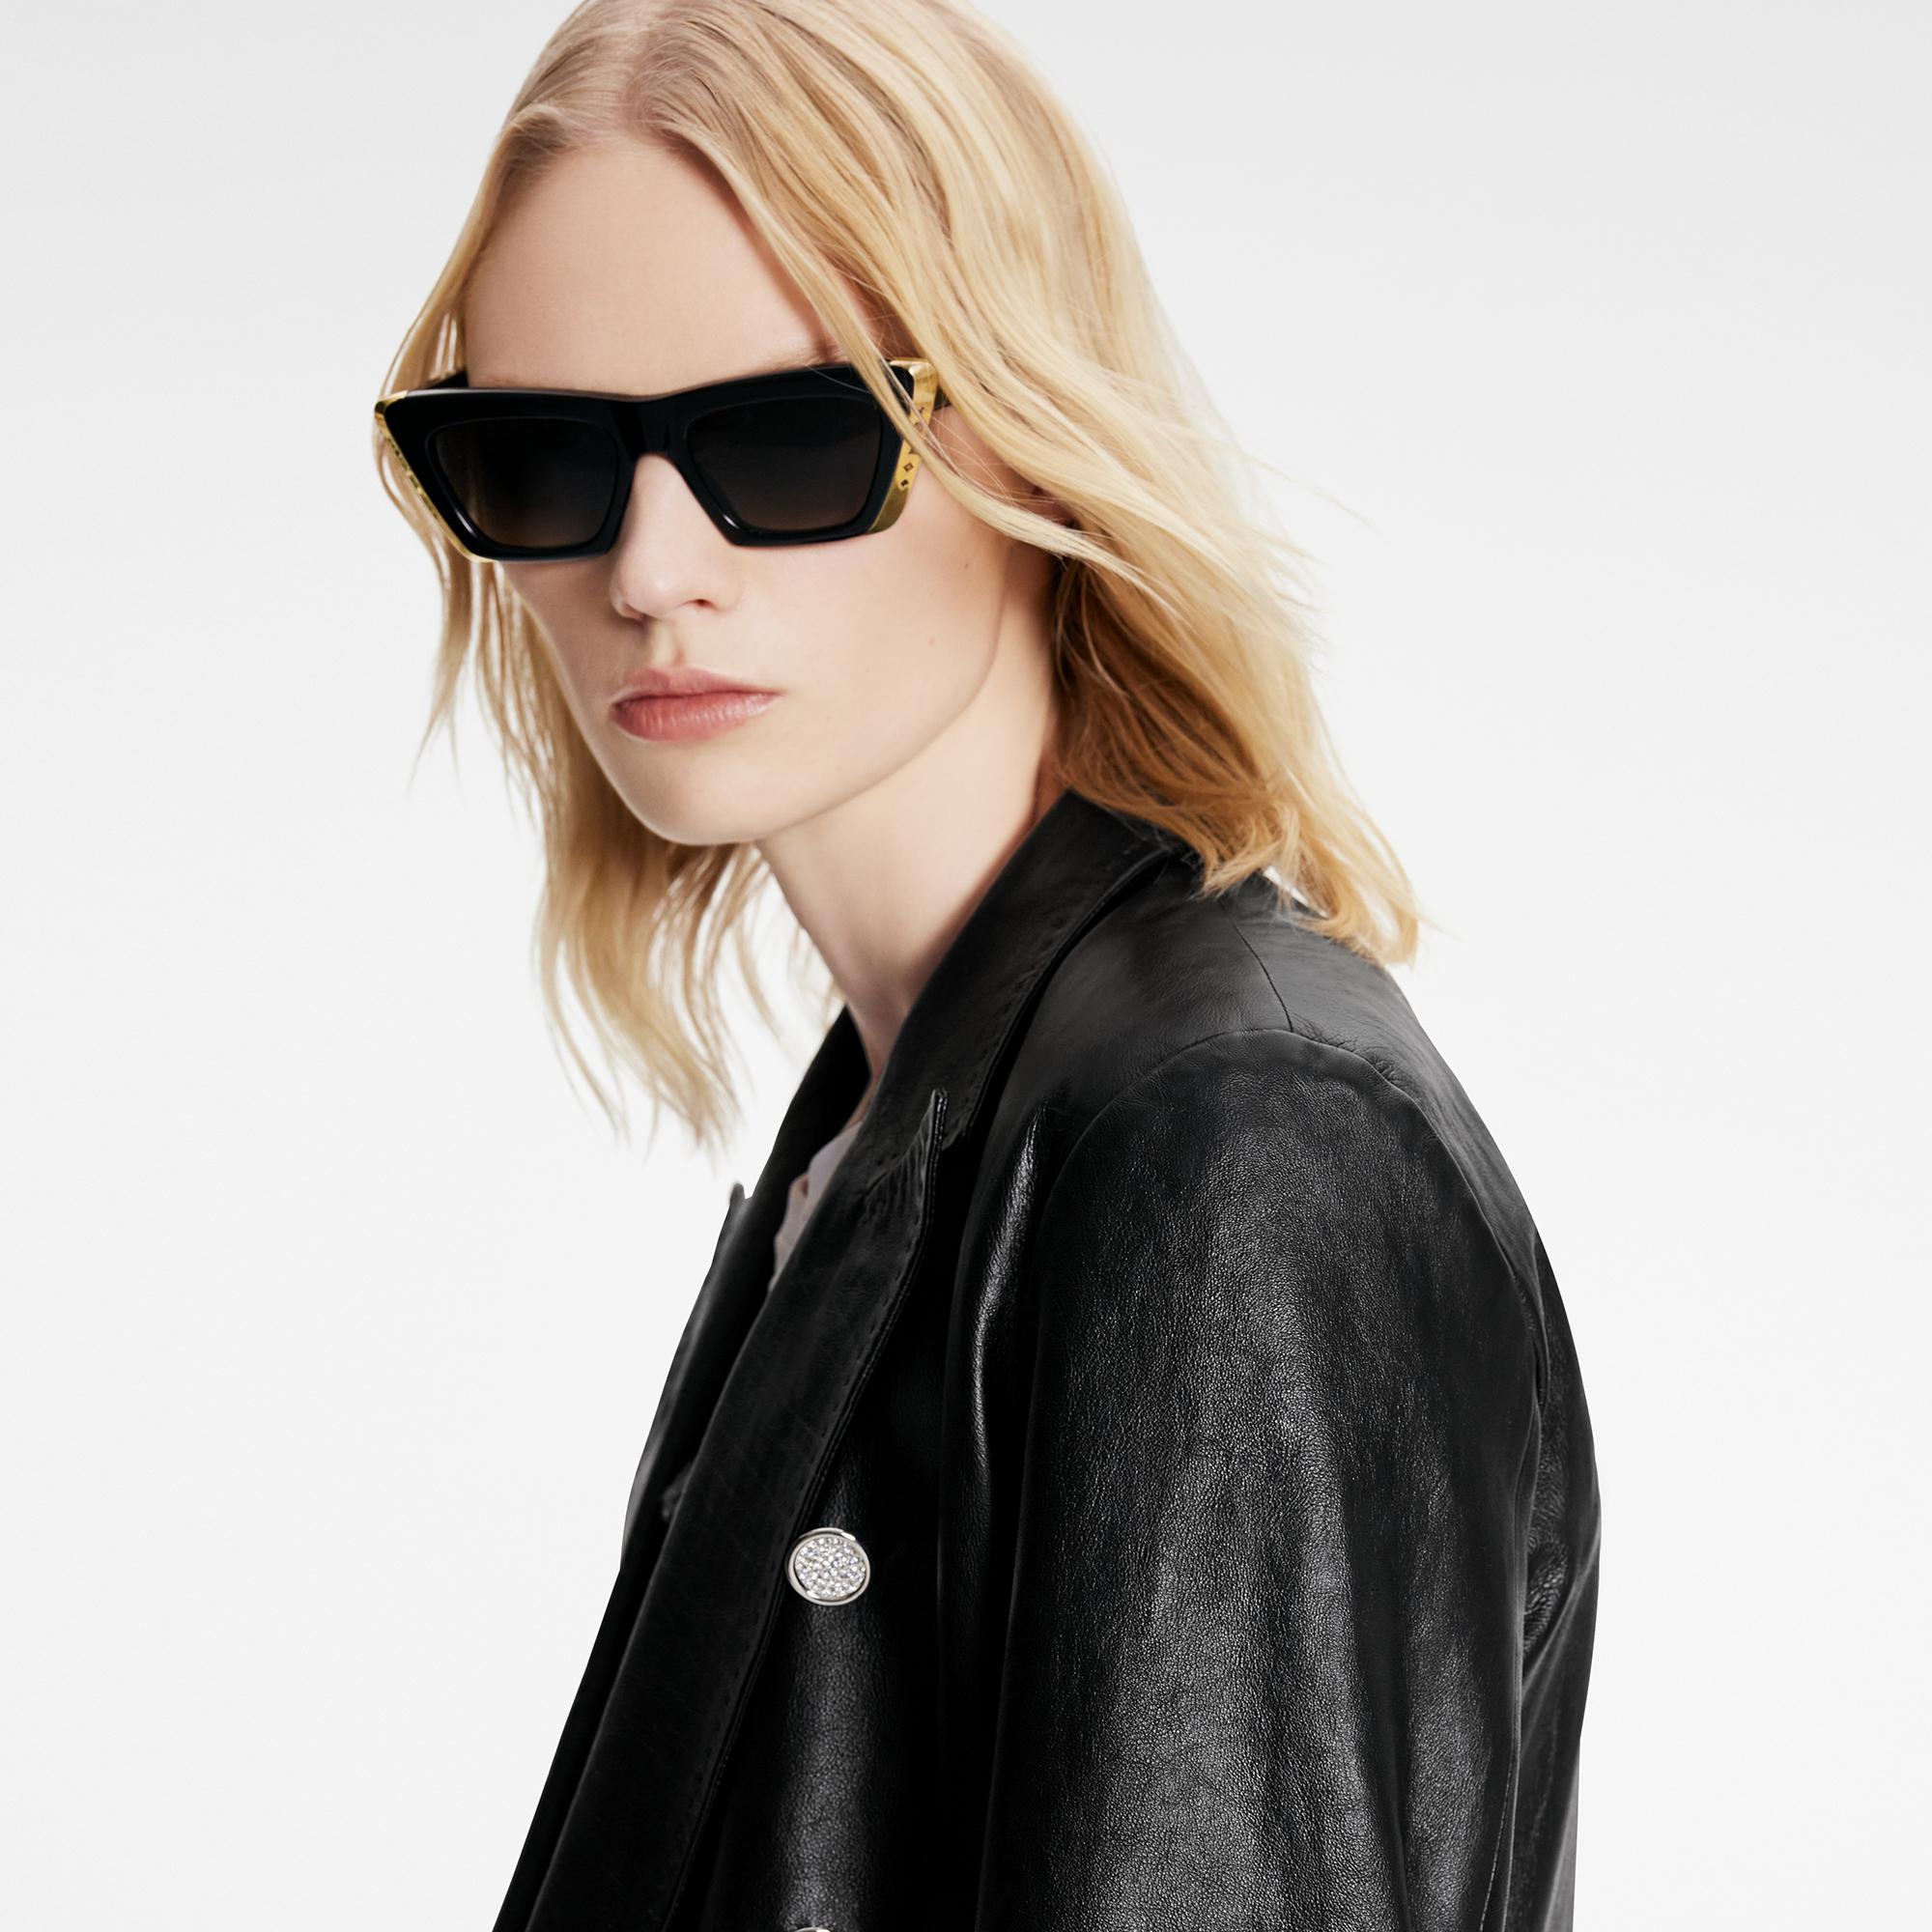 Louis Vuitton Blanca Sunglasses (Z1465E)